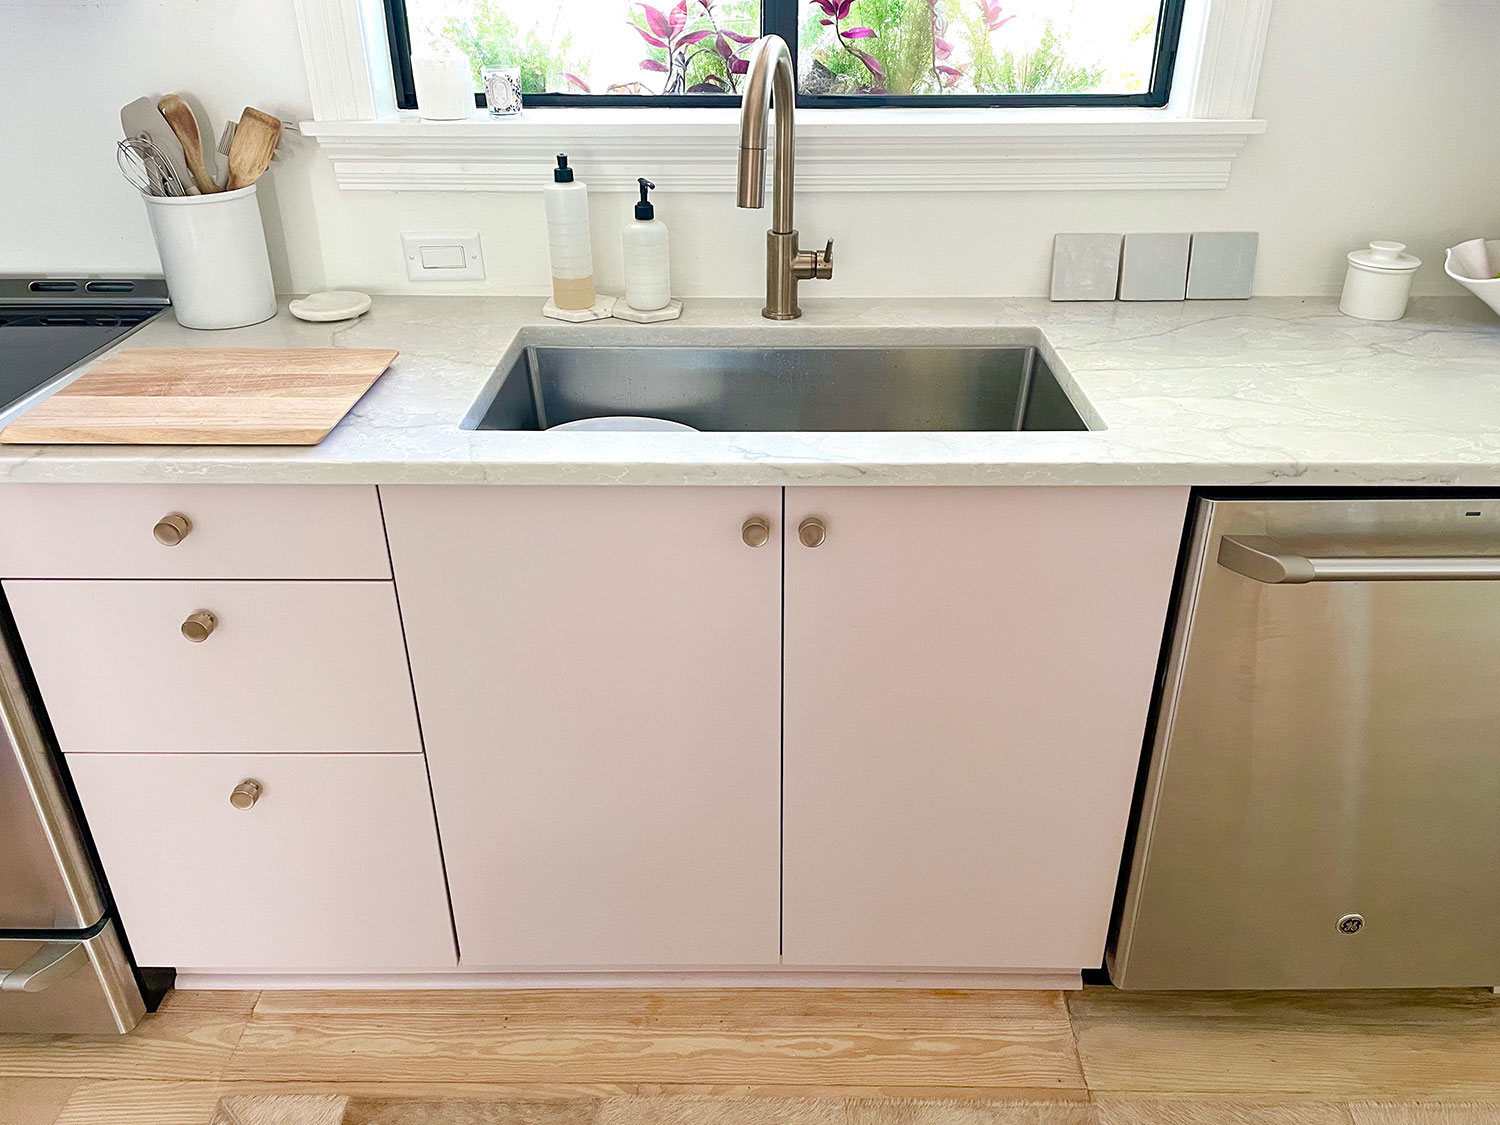 Blue Kitchen Cabinets – AXSTAD Modern Kitchen Series - IKEA